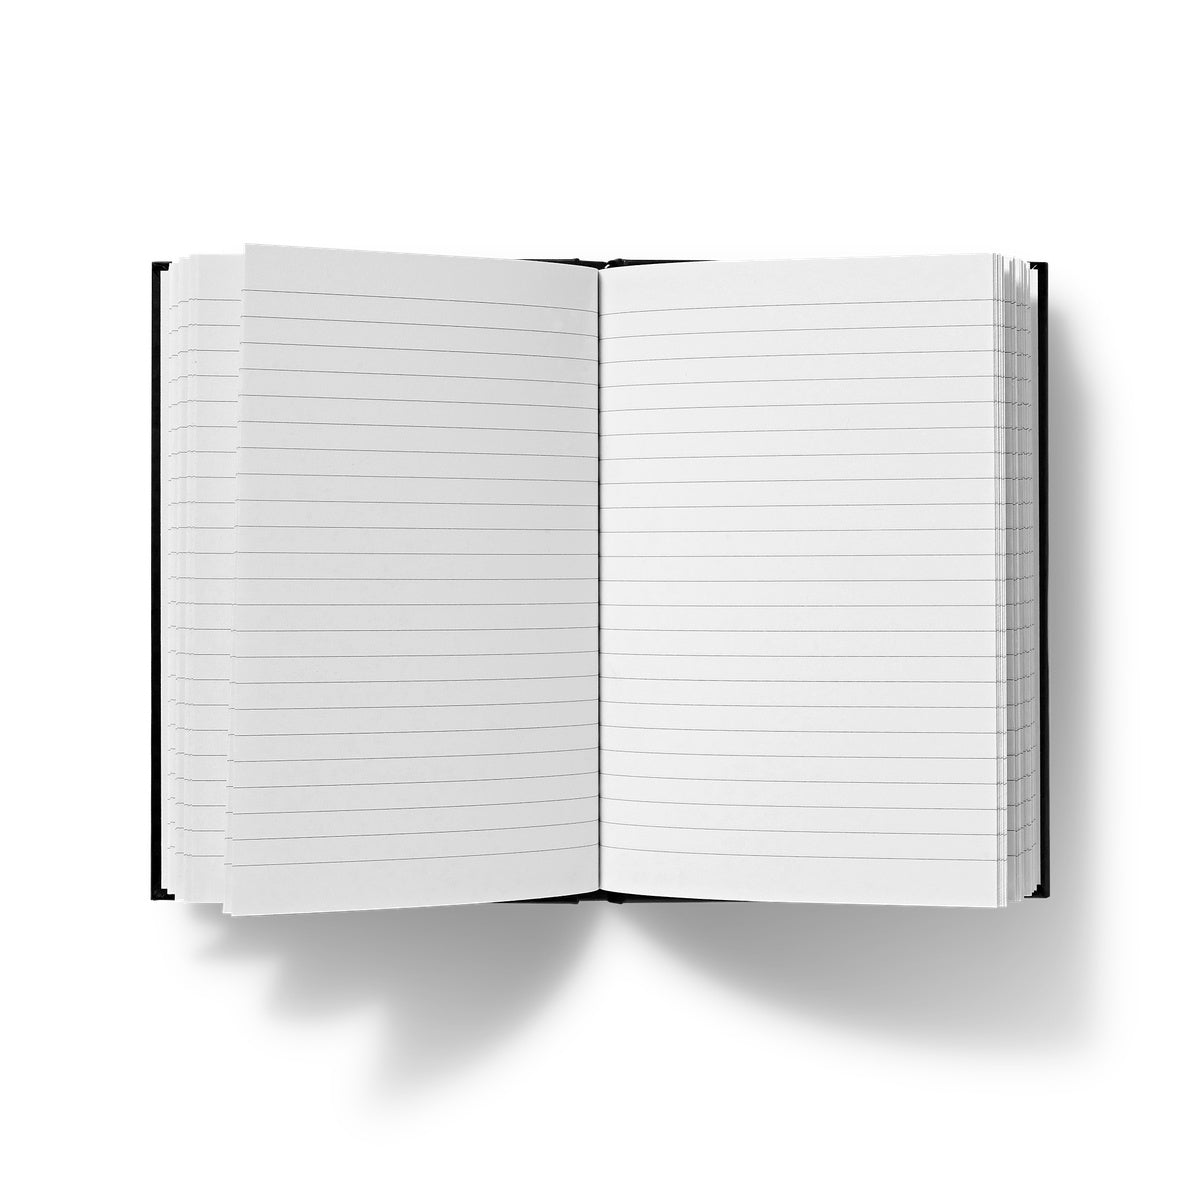 Hardback Journal / Notebook